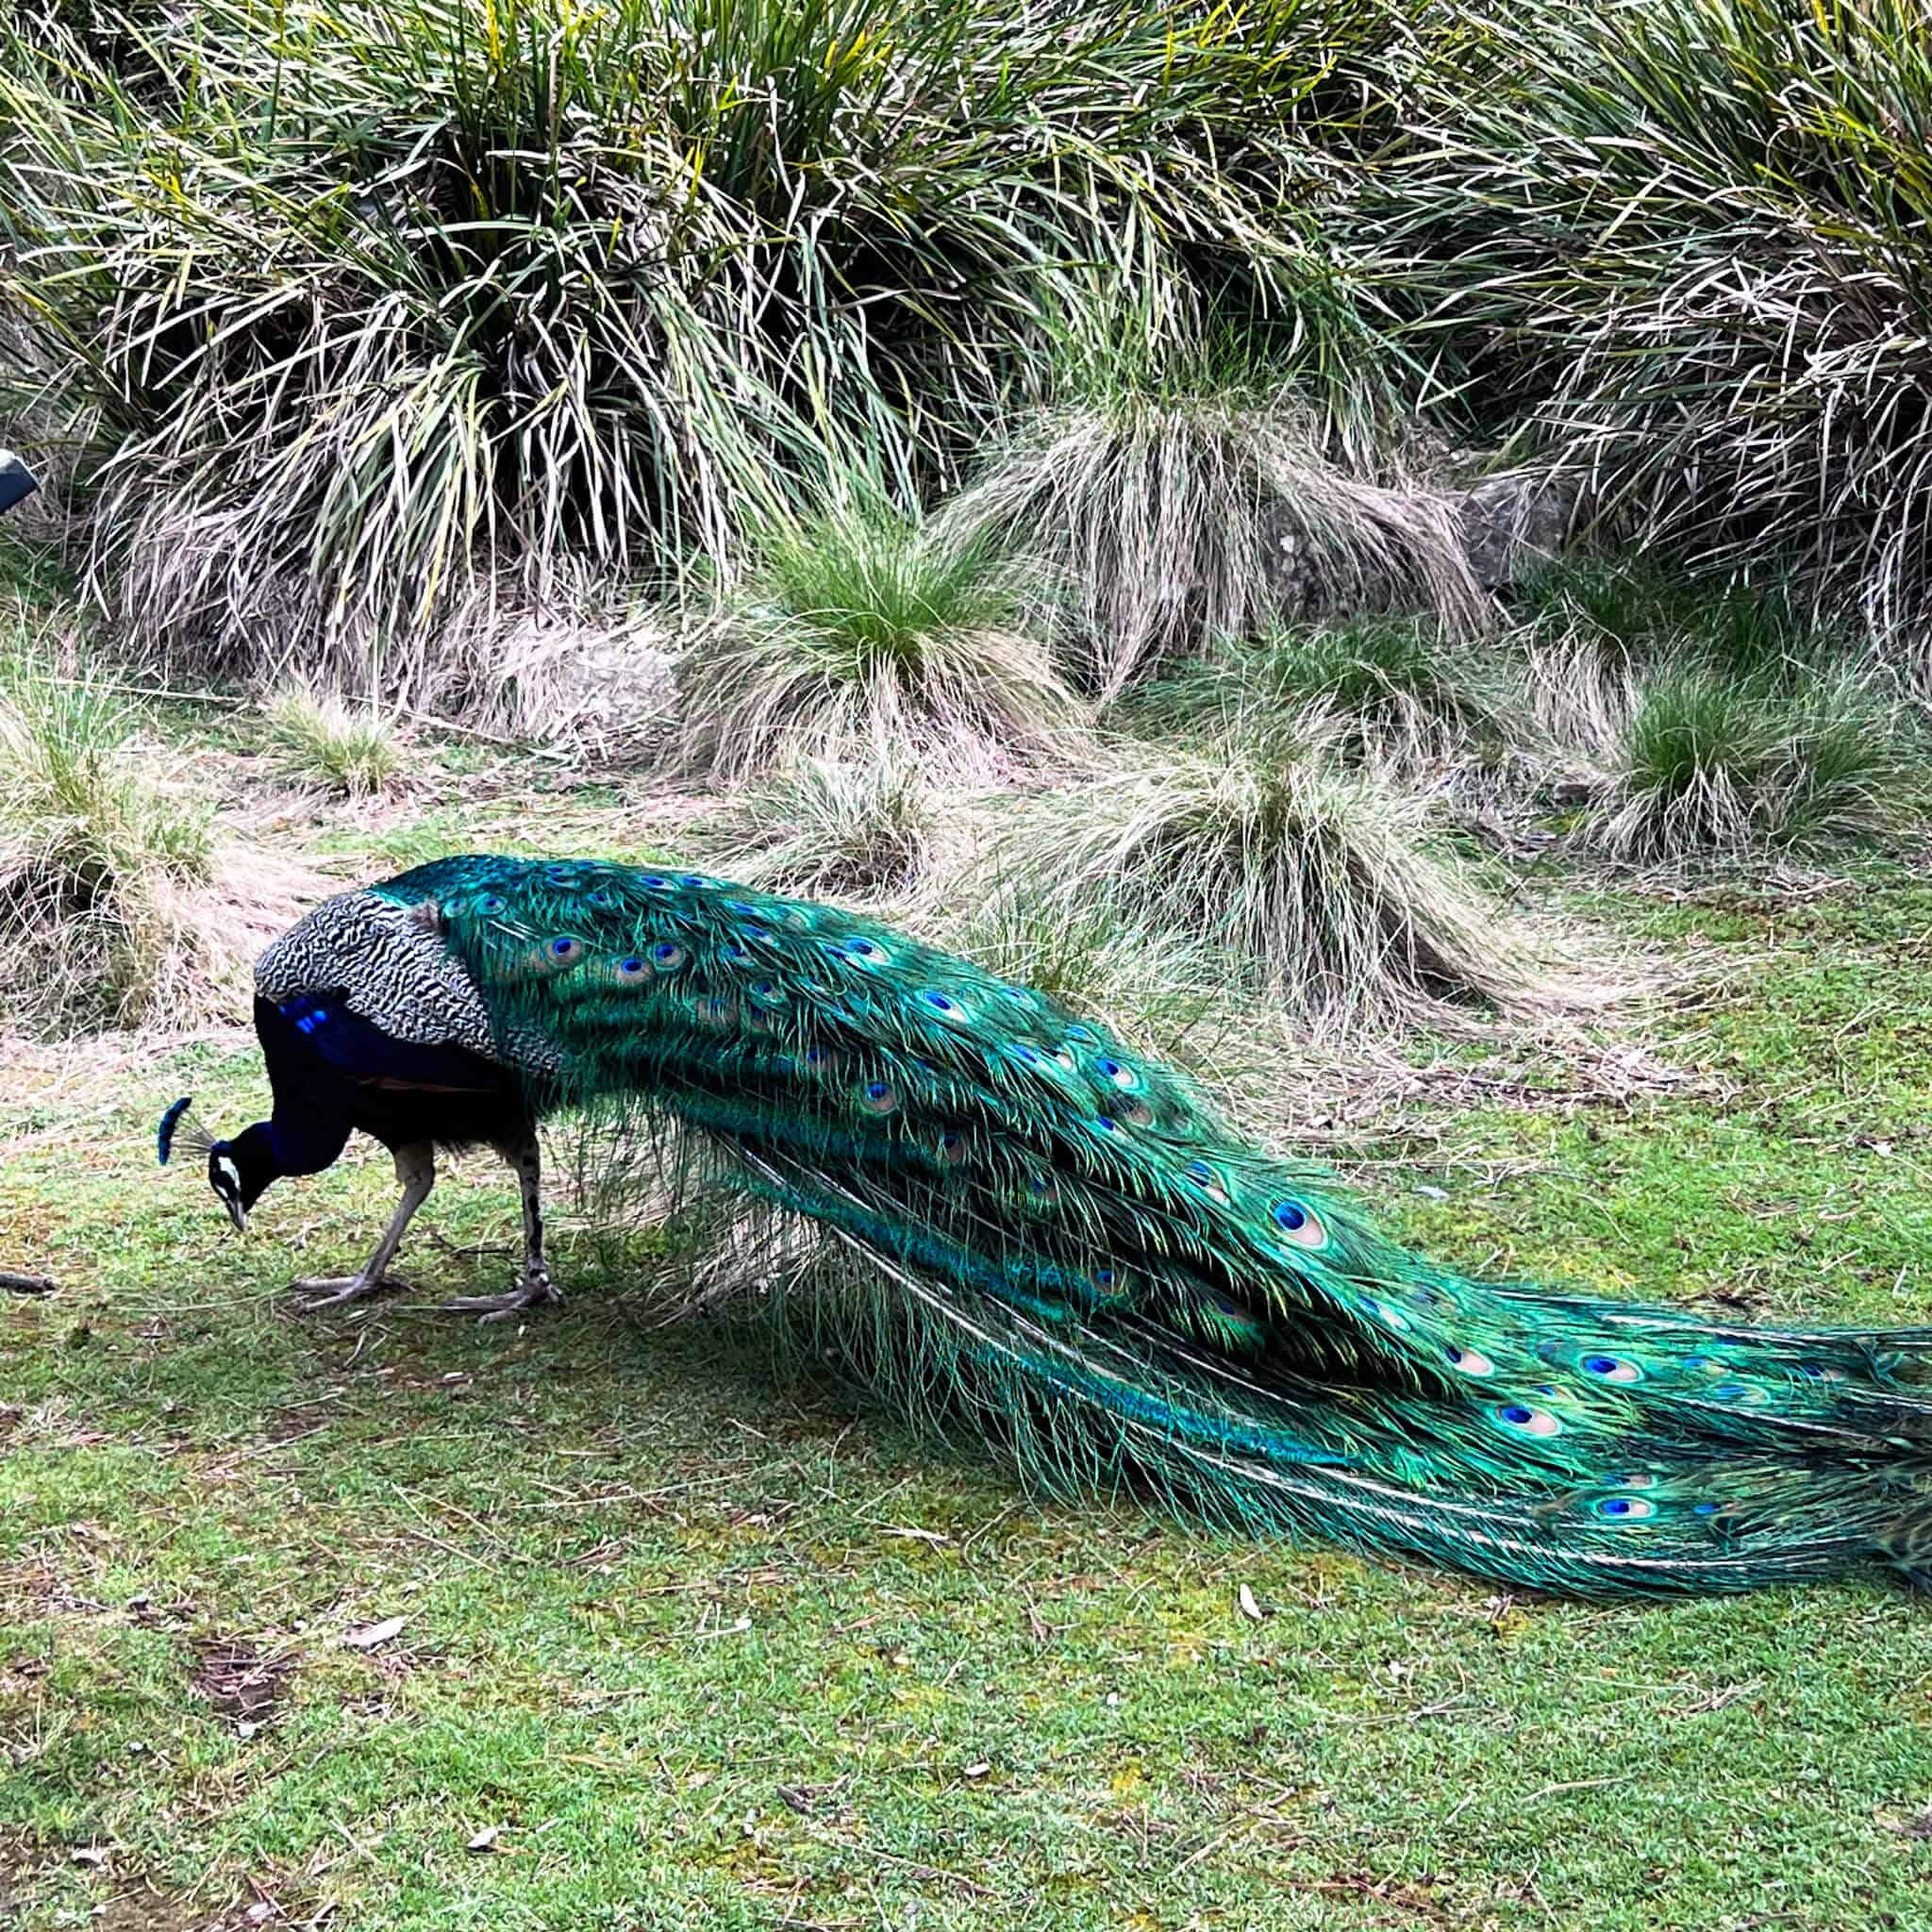 Peacock in Northern Tasmania